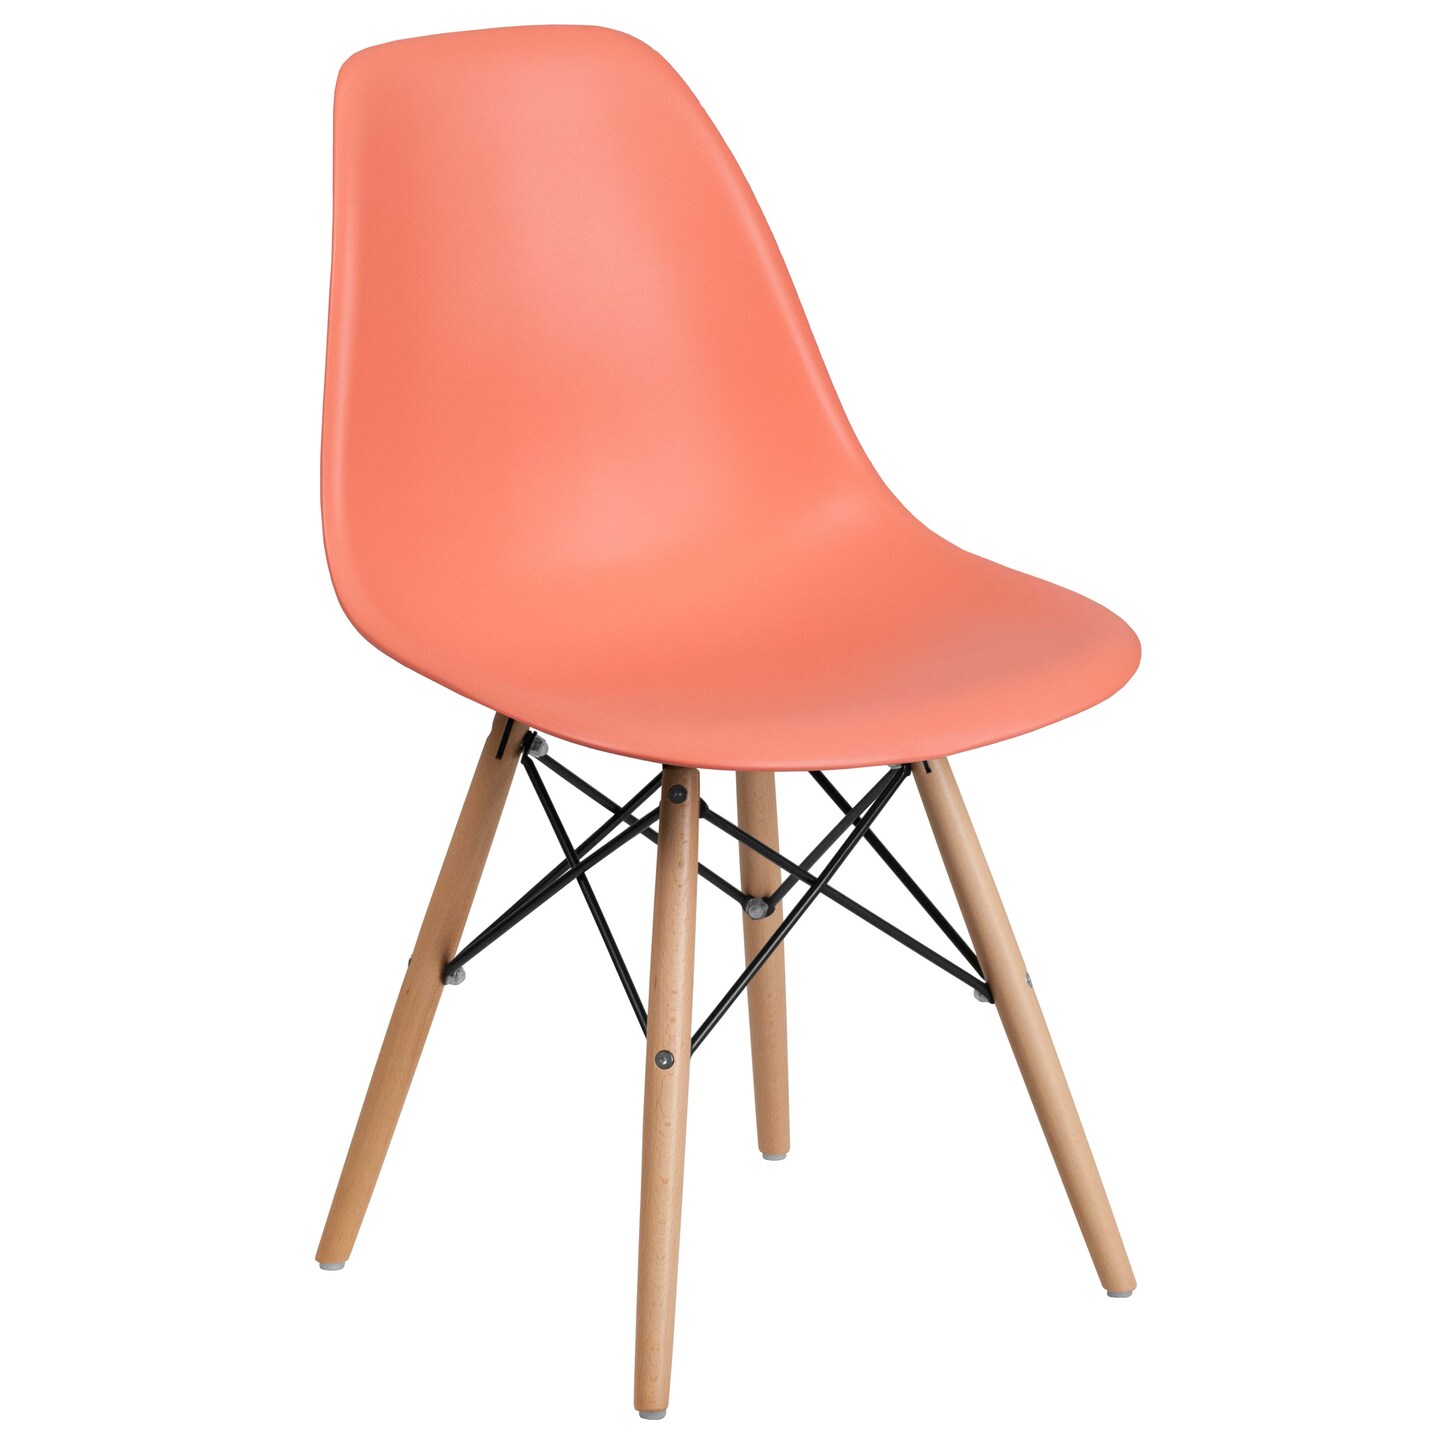 Merrick Lane Elton Series Polypropylene Accent Chair with Metal Braced Wooden Legs